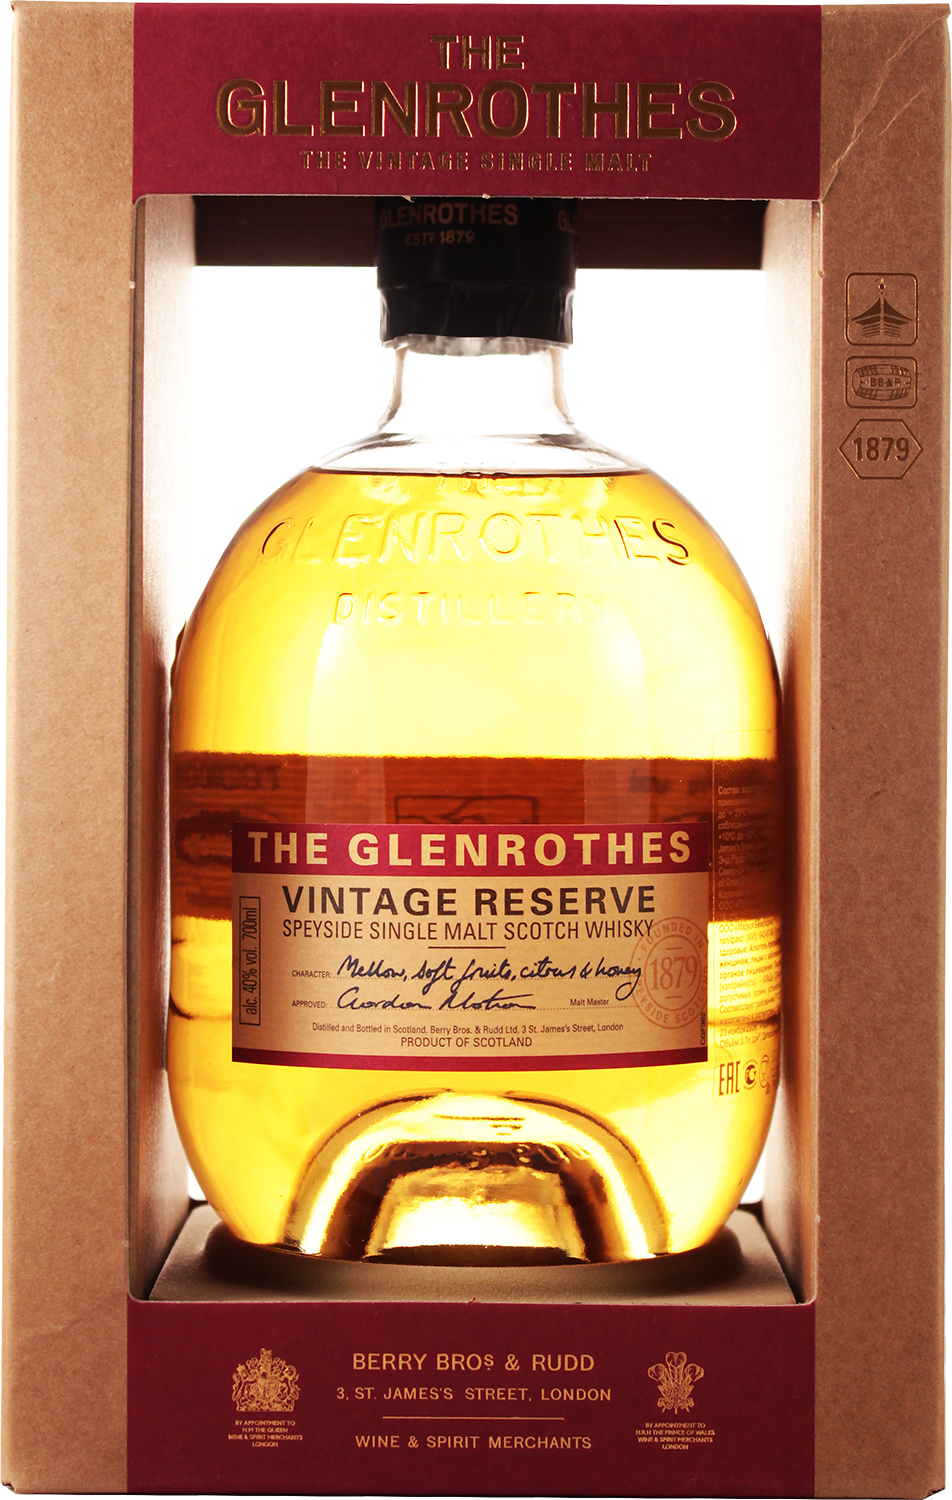 The Glenrothes Vintage Reserve Speyside Single Malt Scotch Whisky (gift box) cragganmore speyside 12 y o single malt scotch whisky gift box